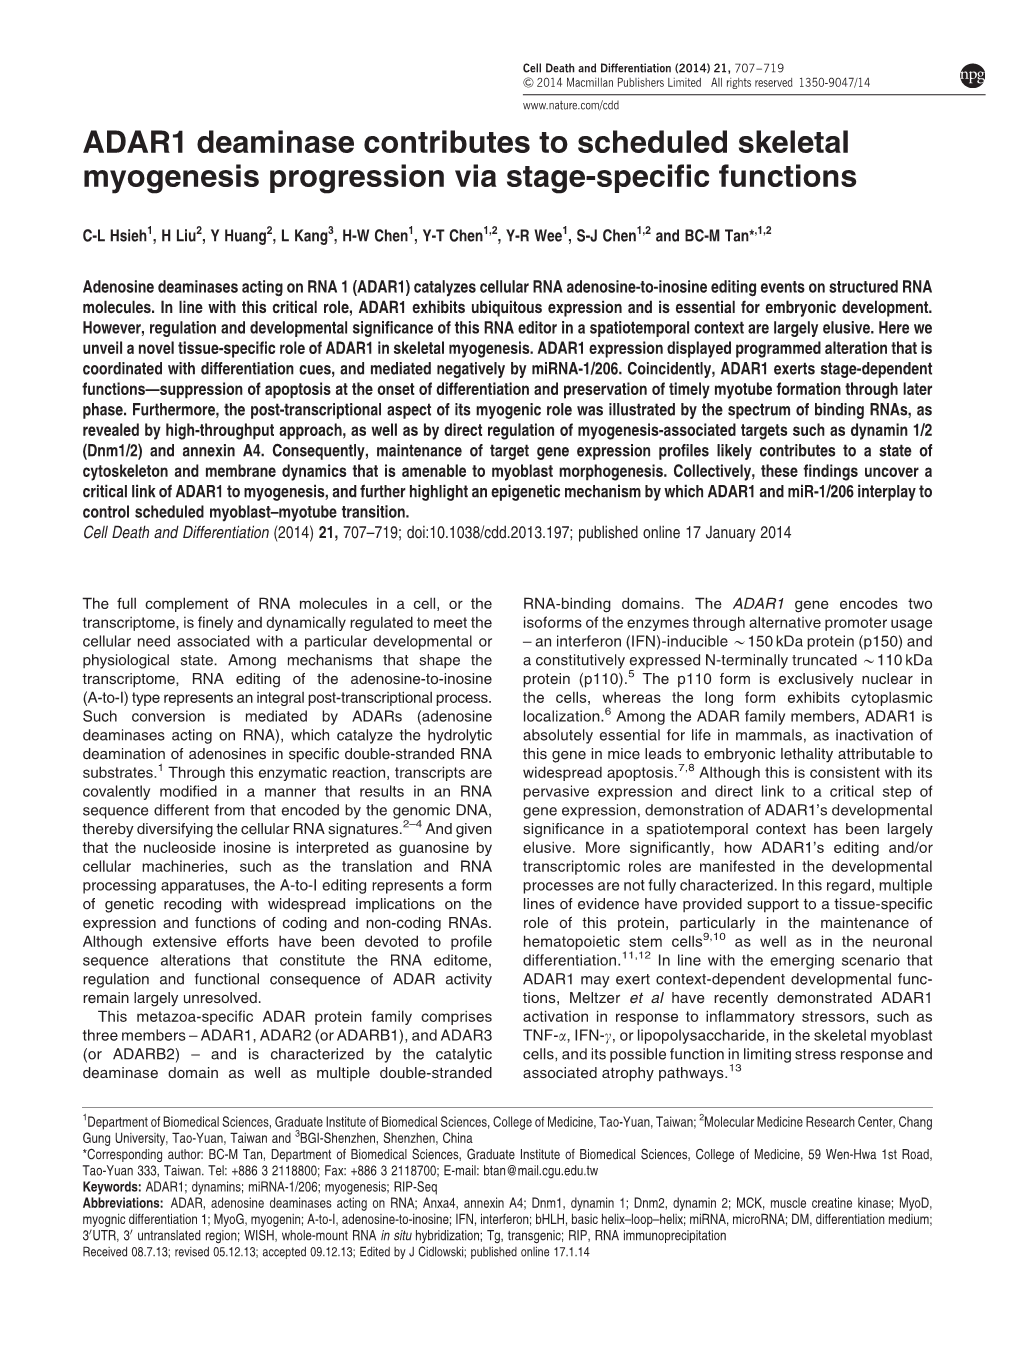 ADAR1 Deaminase Contributes to Scheduled Skeletal Myogenesis Progression Via Stage-Speciﬁc Functions